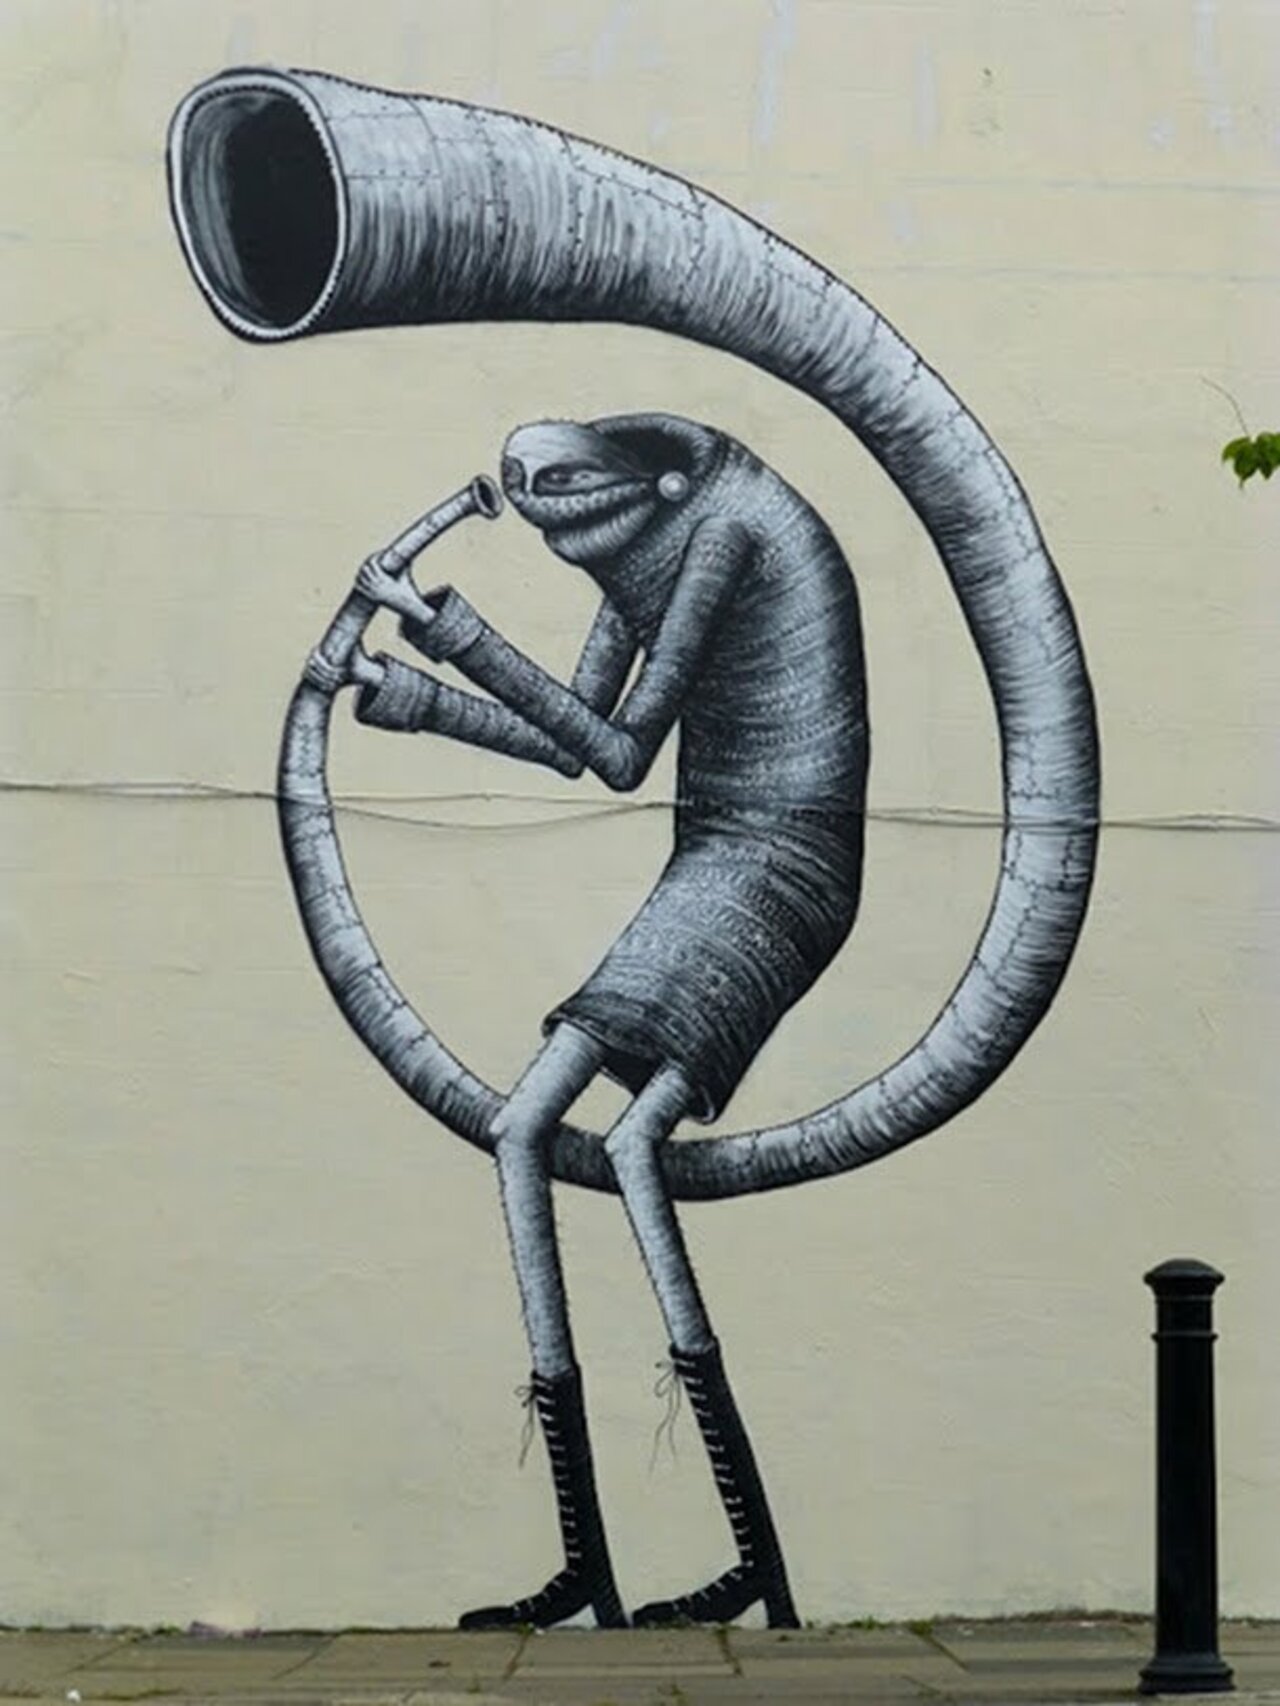 London, 2013Phlegm #streetart #urbanart #mural #graffiti https://t.co/vwTXOc6vFV